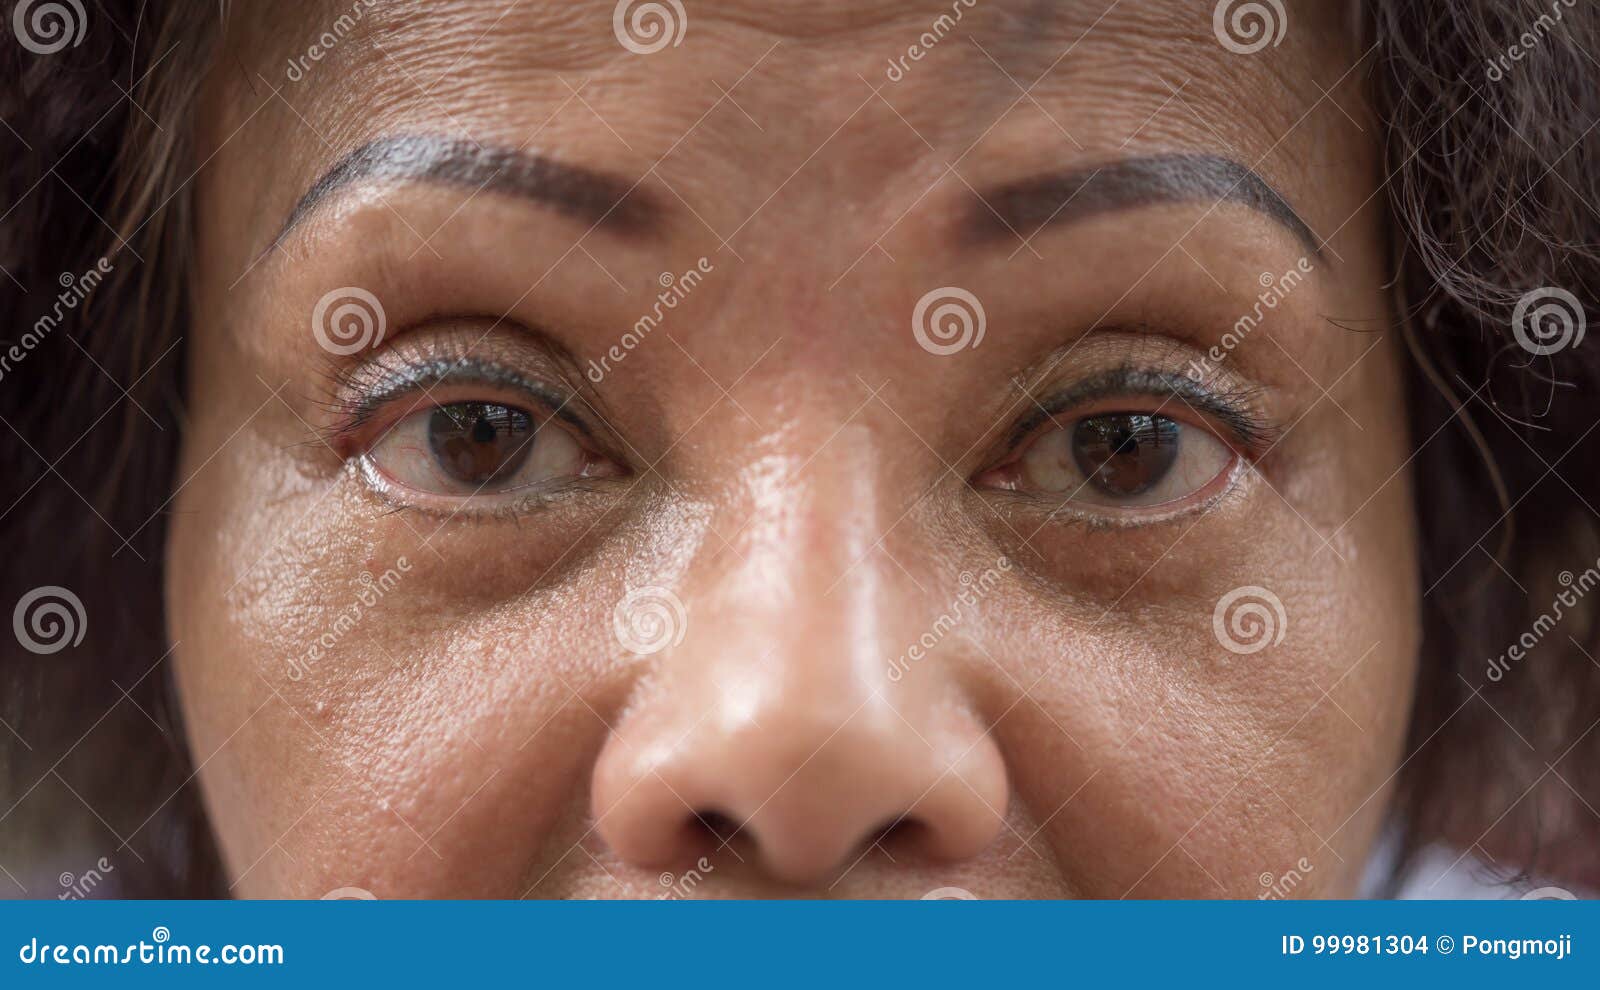 asian elder women show her eyes and eyebrow tattoo